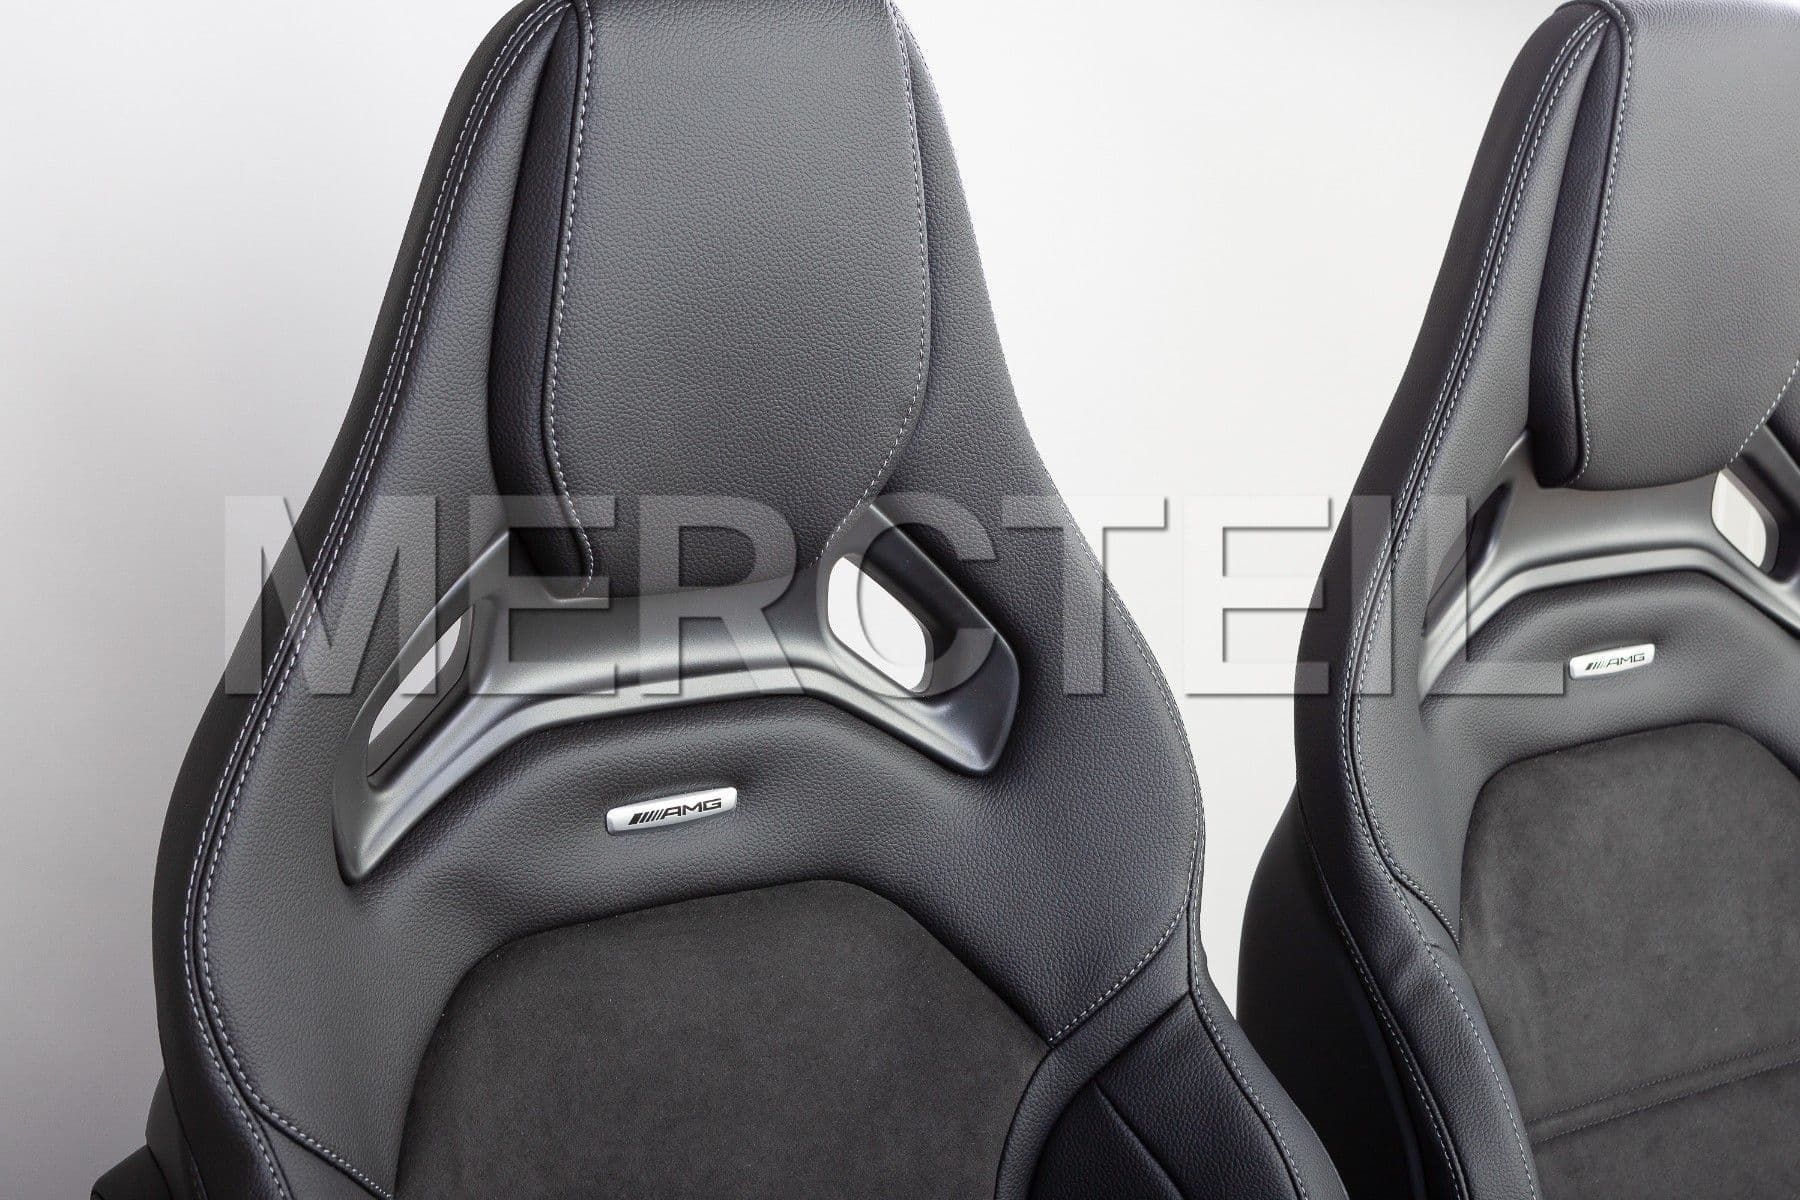 C-Class AMG Sport Alcantara Leather Seats LHD Genuine Mercedes-AMG